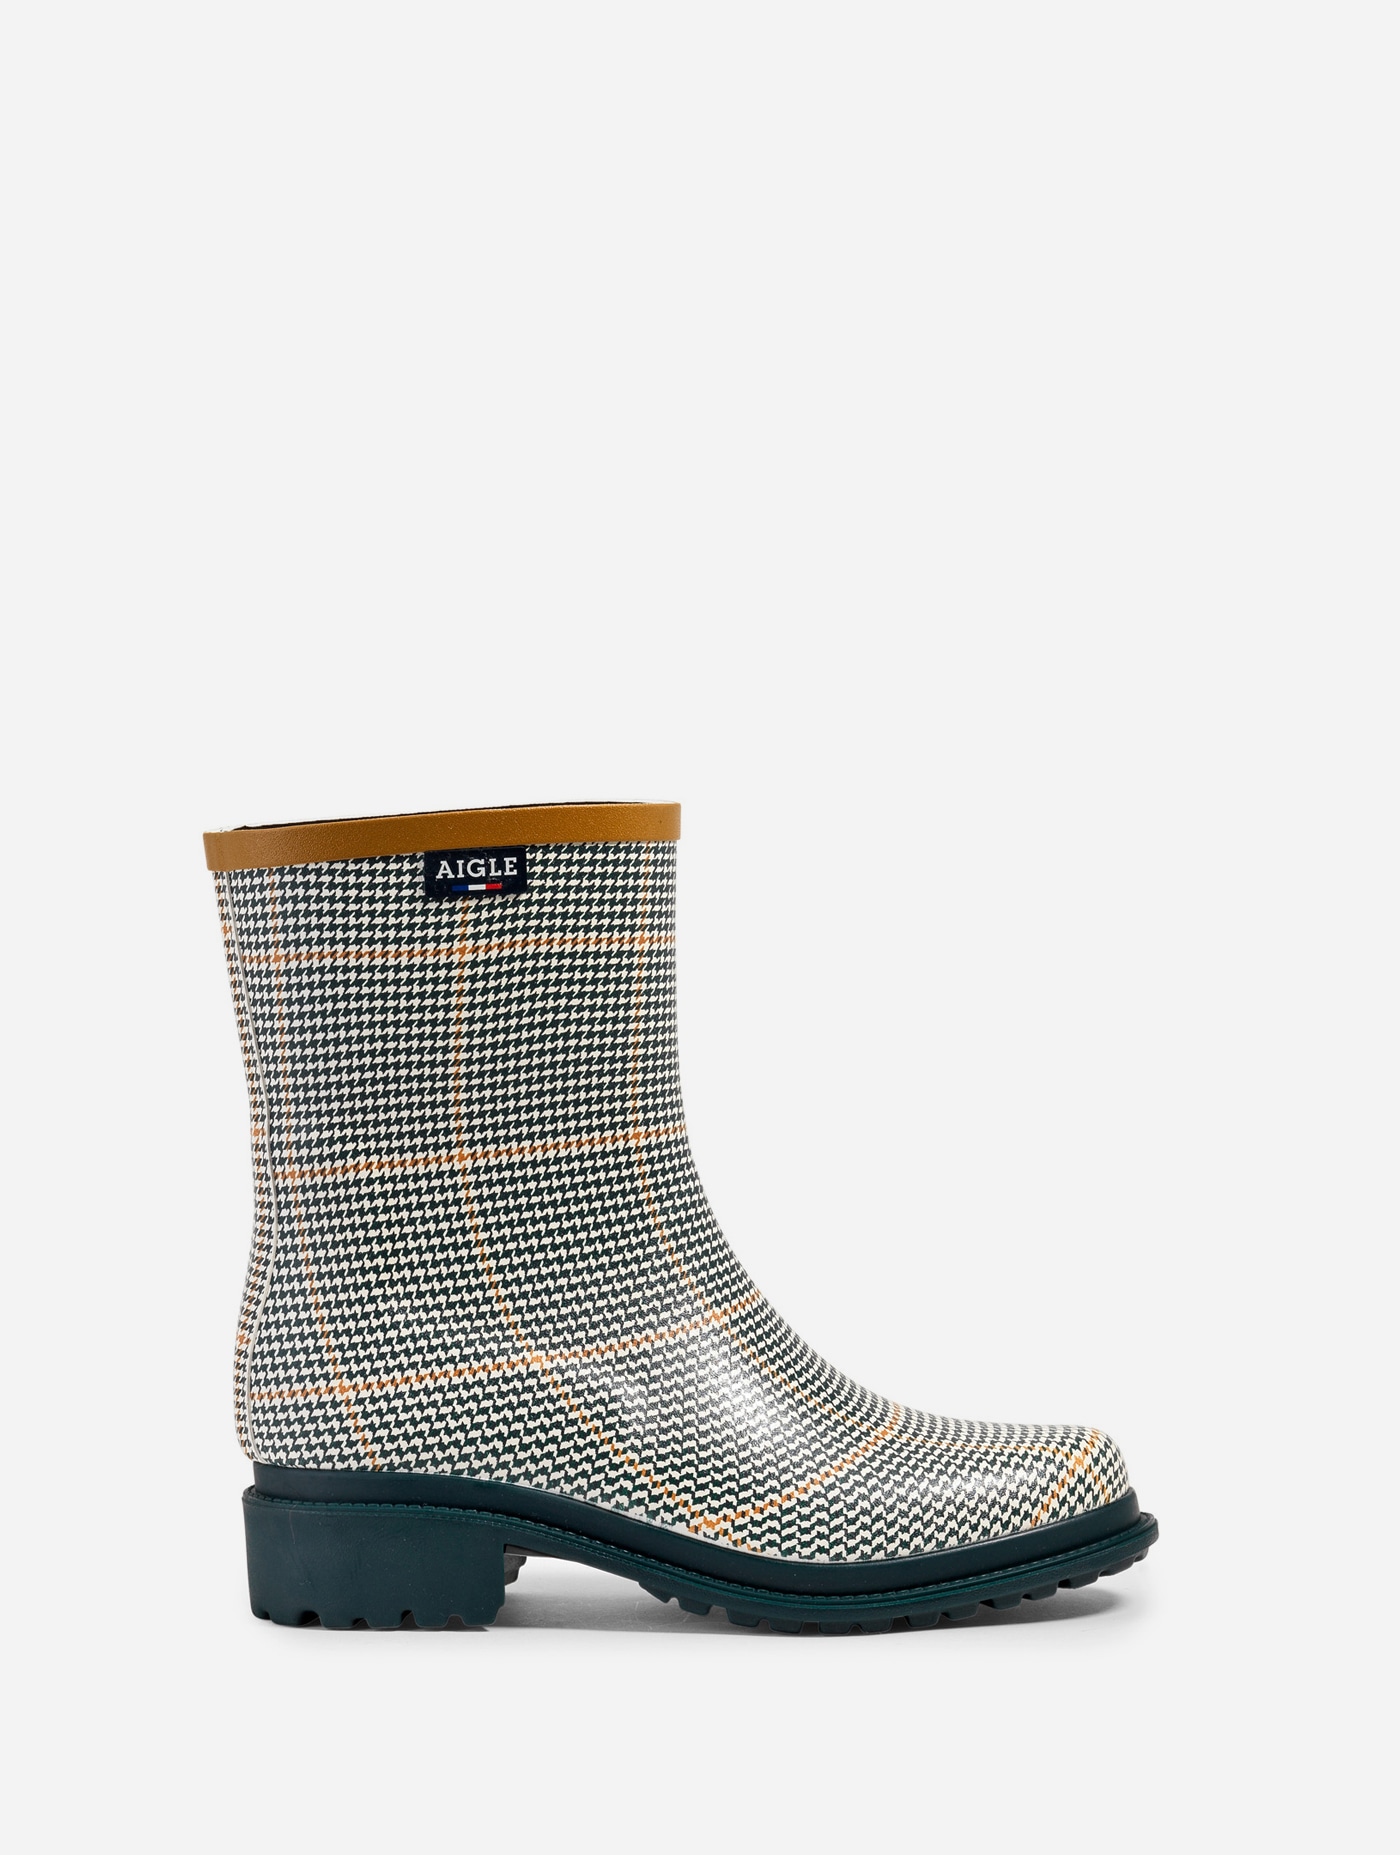 I fare dramatiker Lave om Aigle - Urban rain boots, Made in France Fudge pr - Fulfeel mid ptwomen |  AIGLE